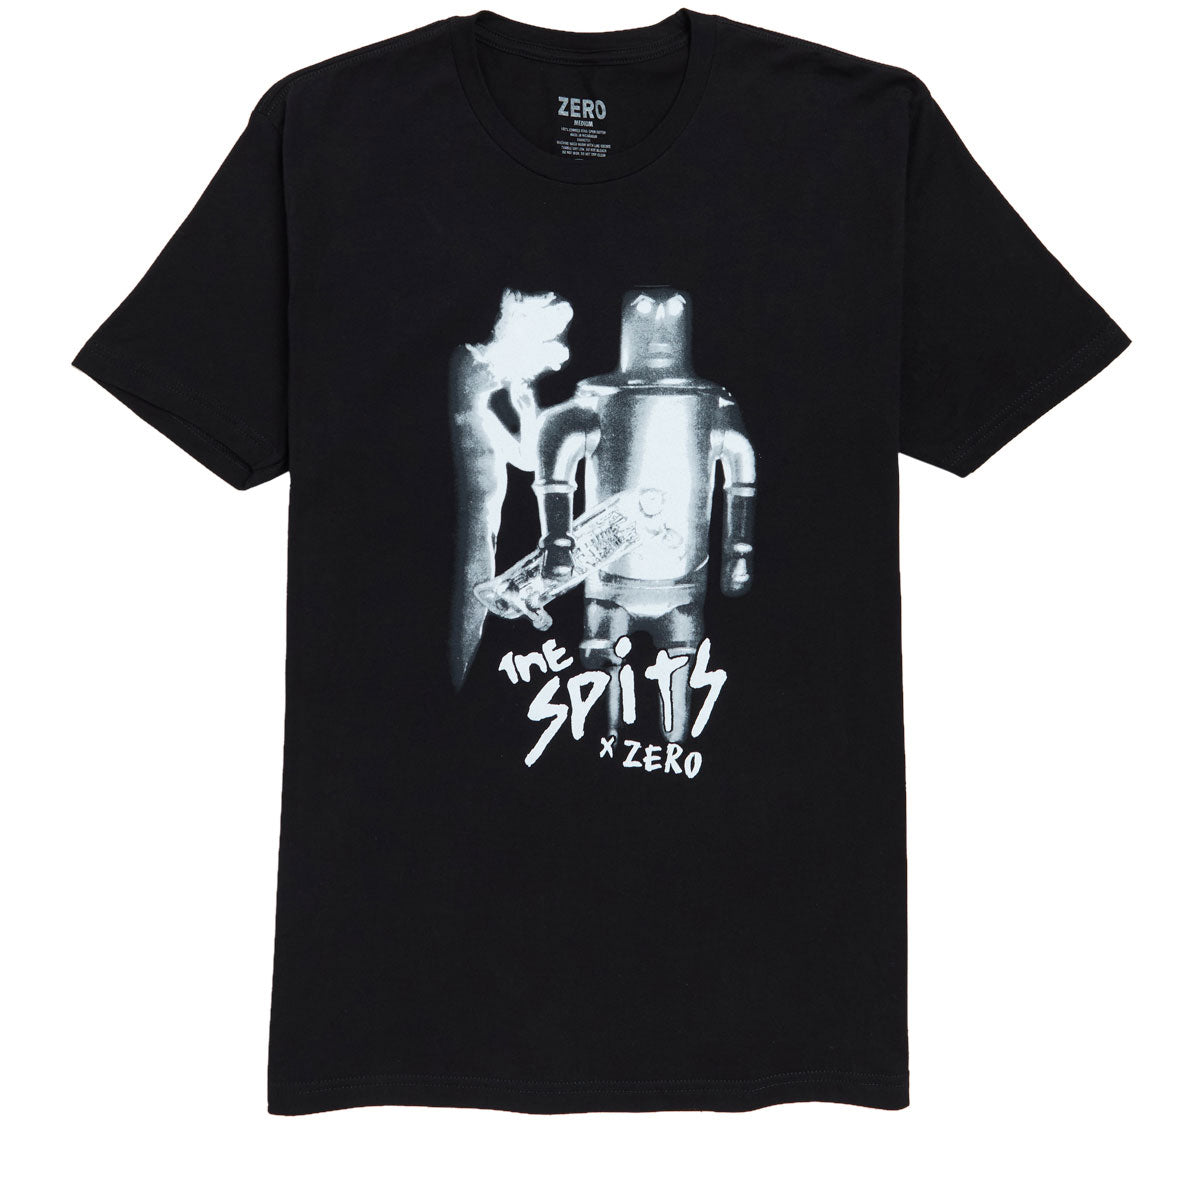 Zero x Spits Robot T-Shirt - Black image 1